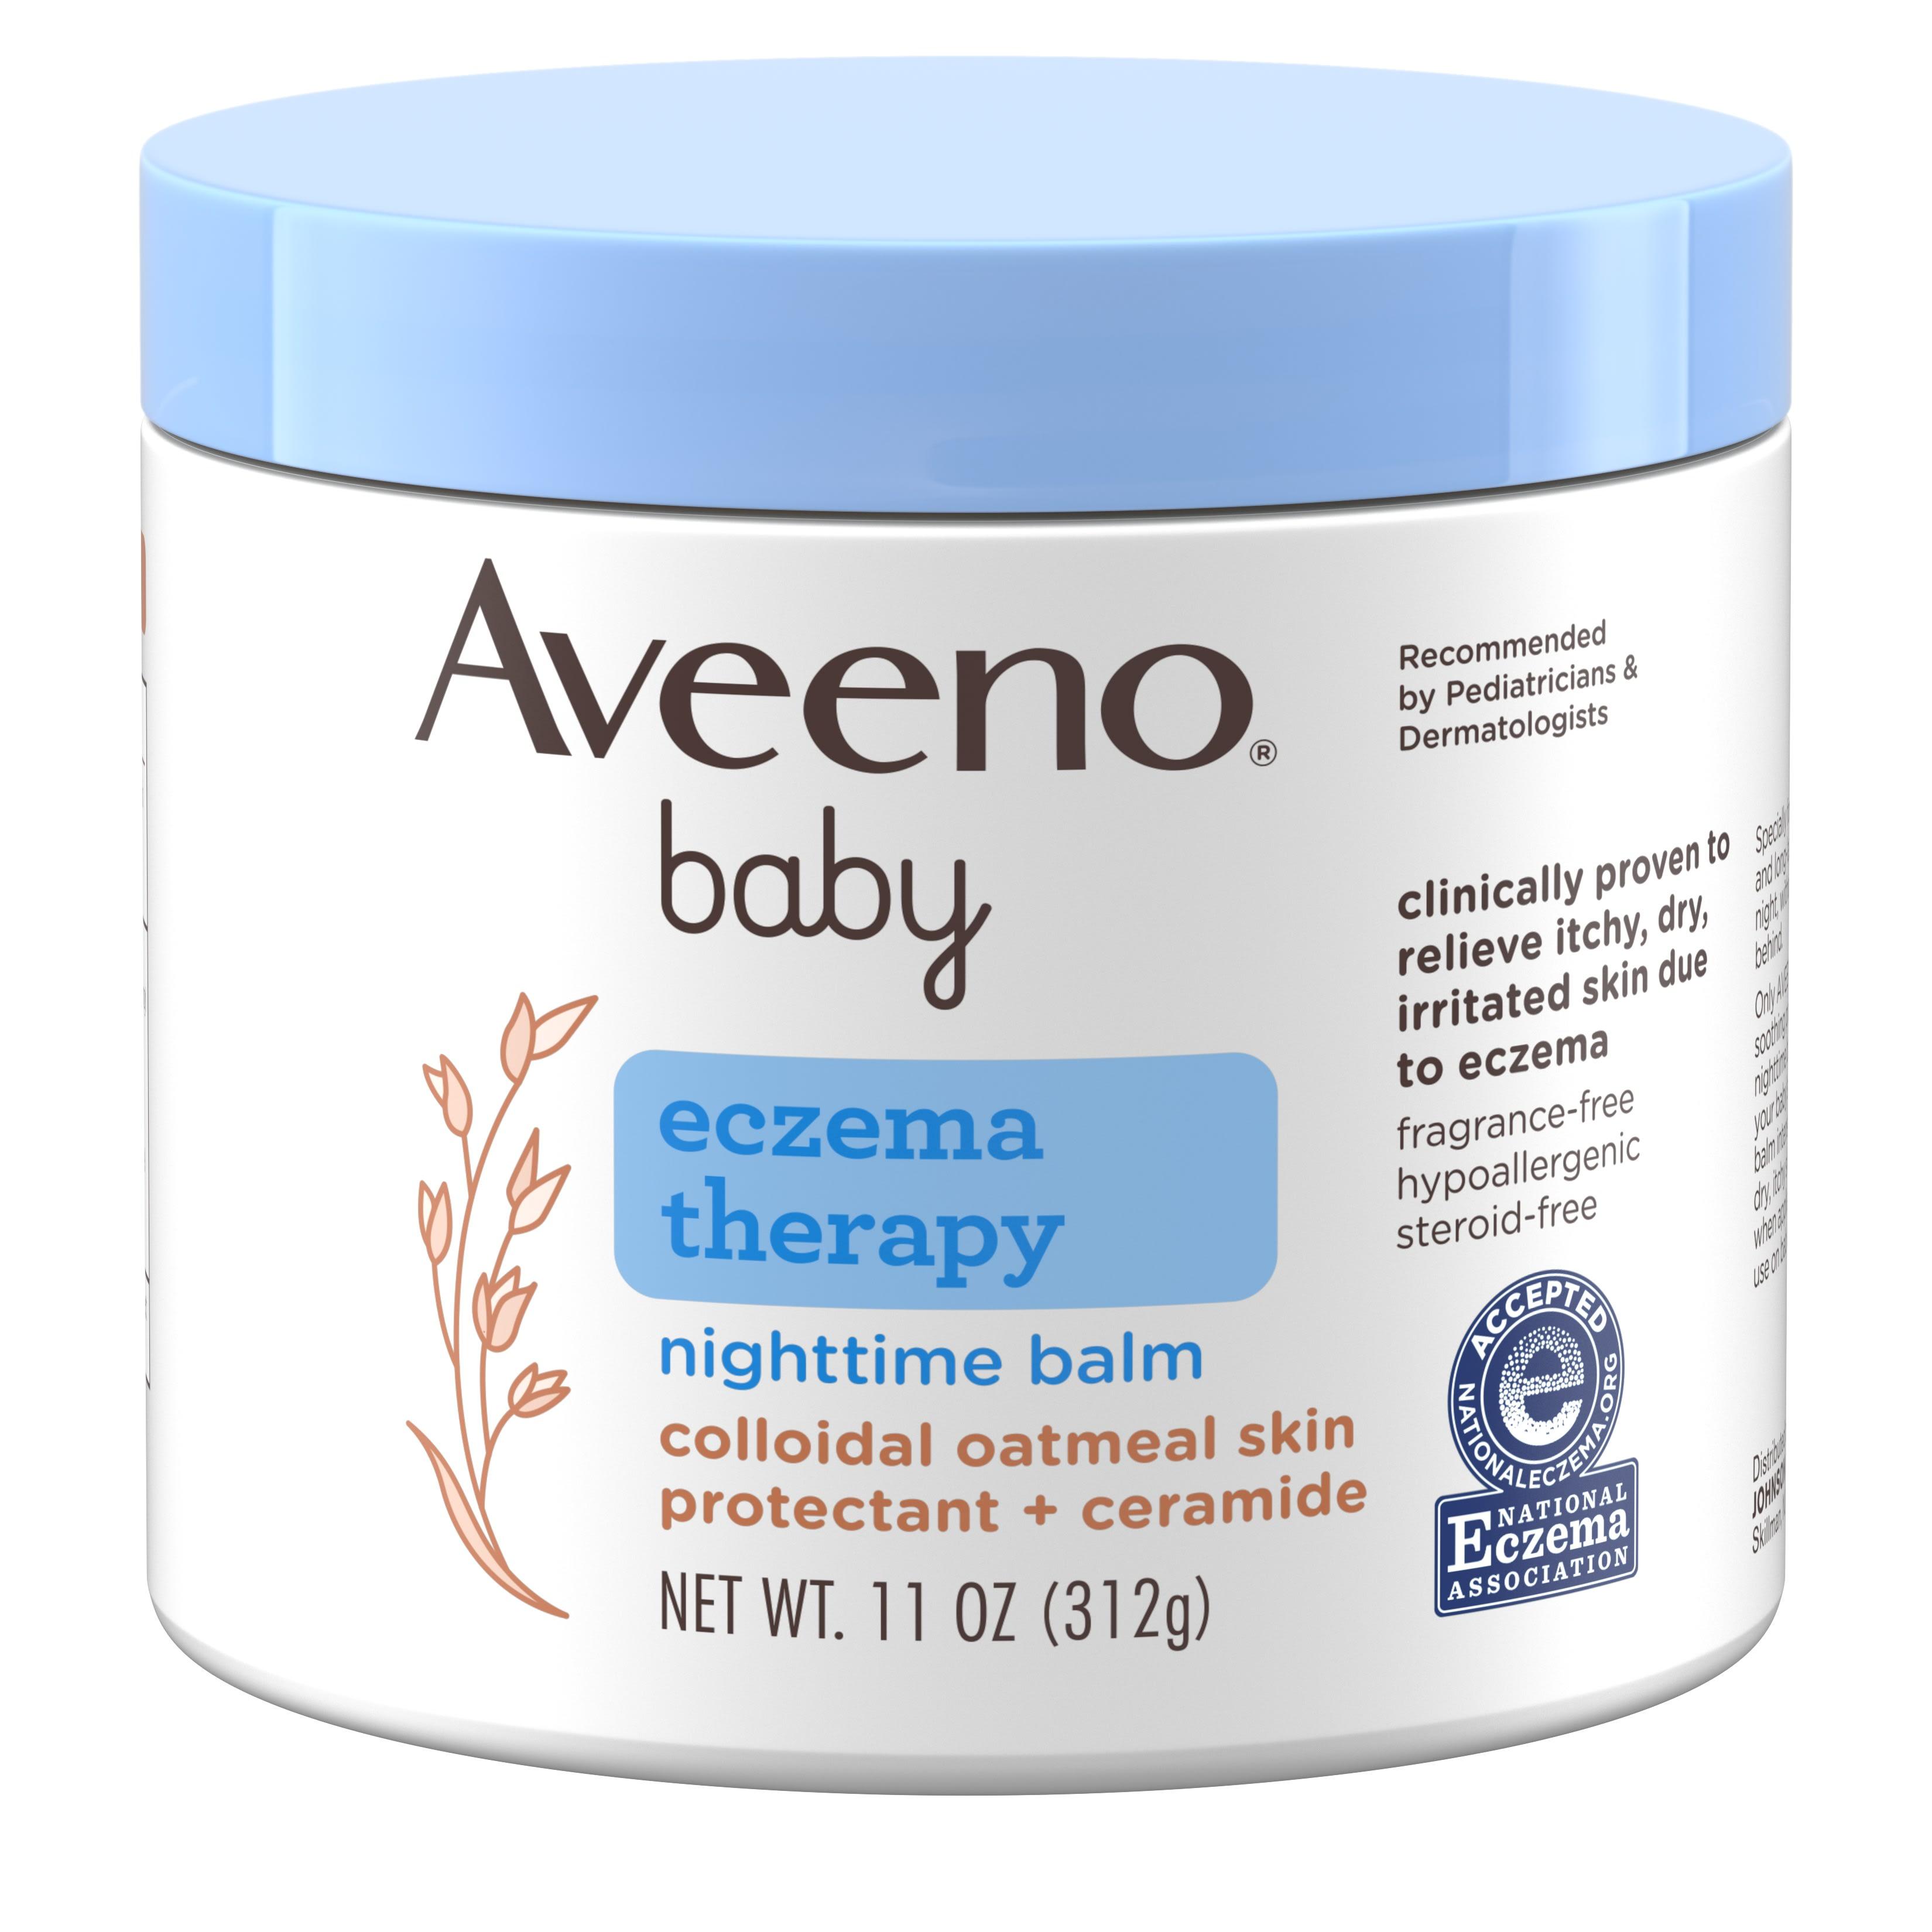 Aveeno Baby Eczema Therapy Nighttime Balm 312g